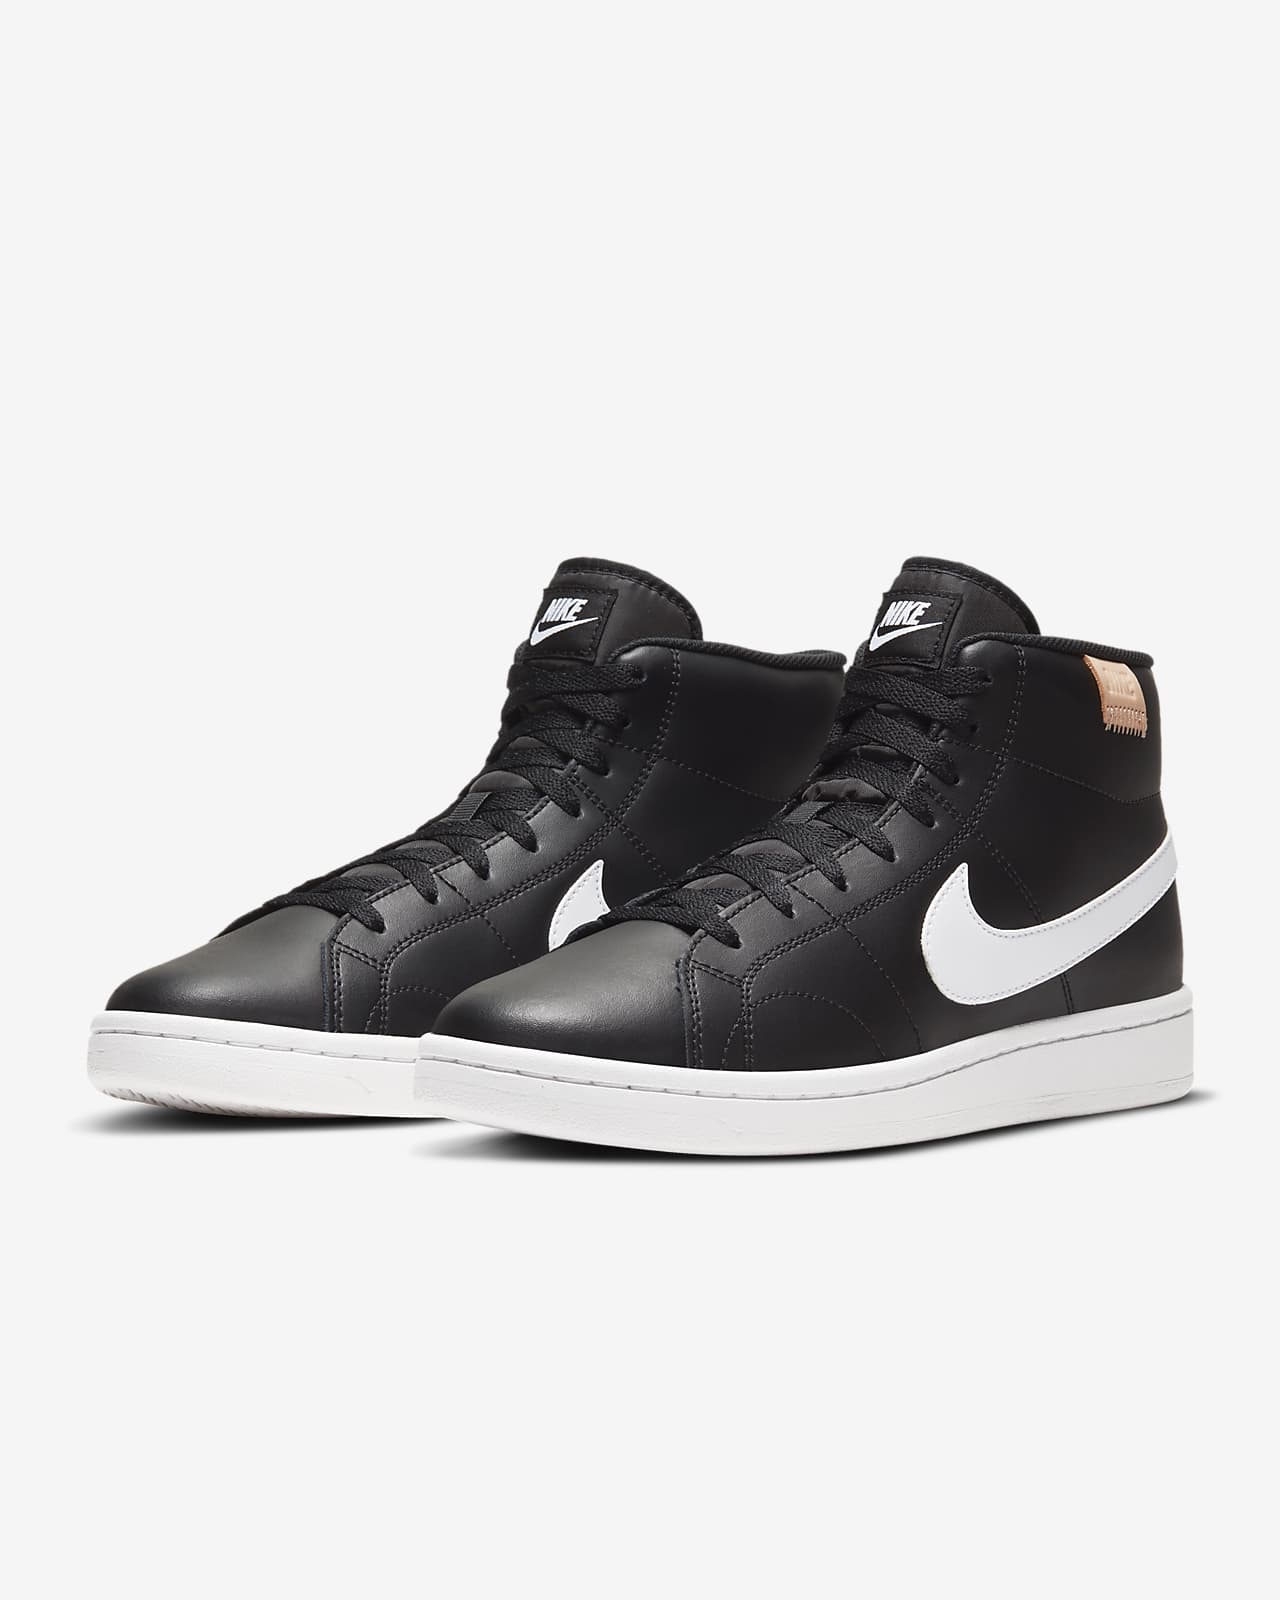 Court Royale 2 Mid Shoes. Nike.com